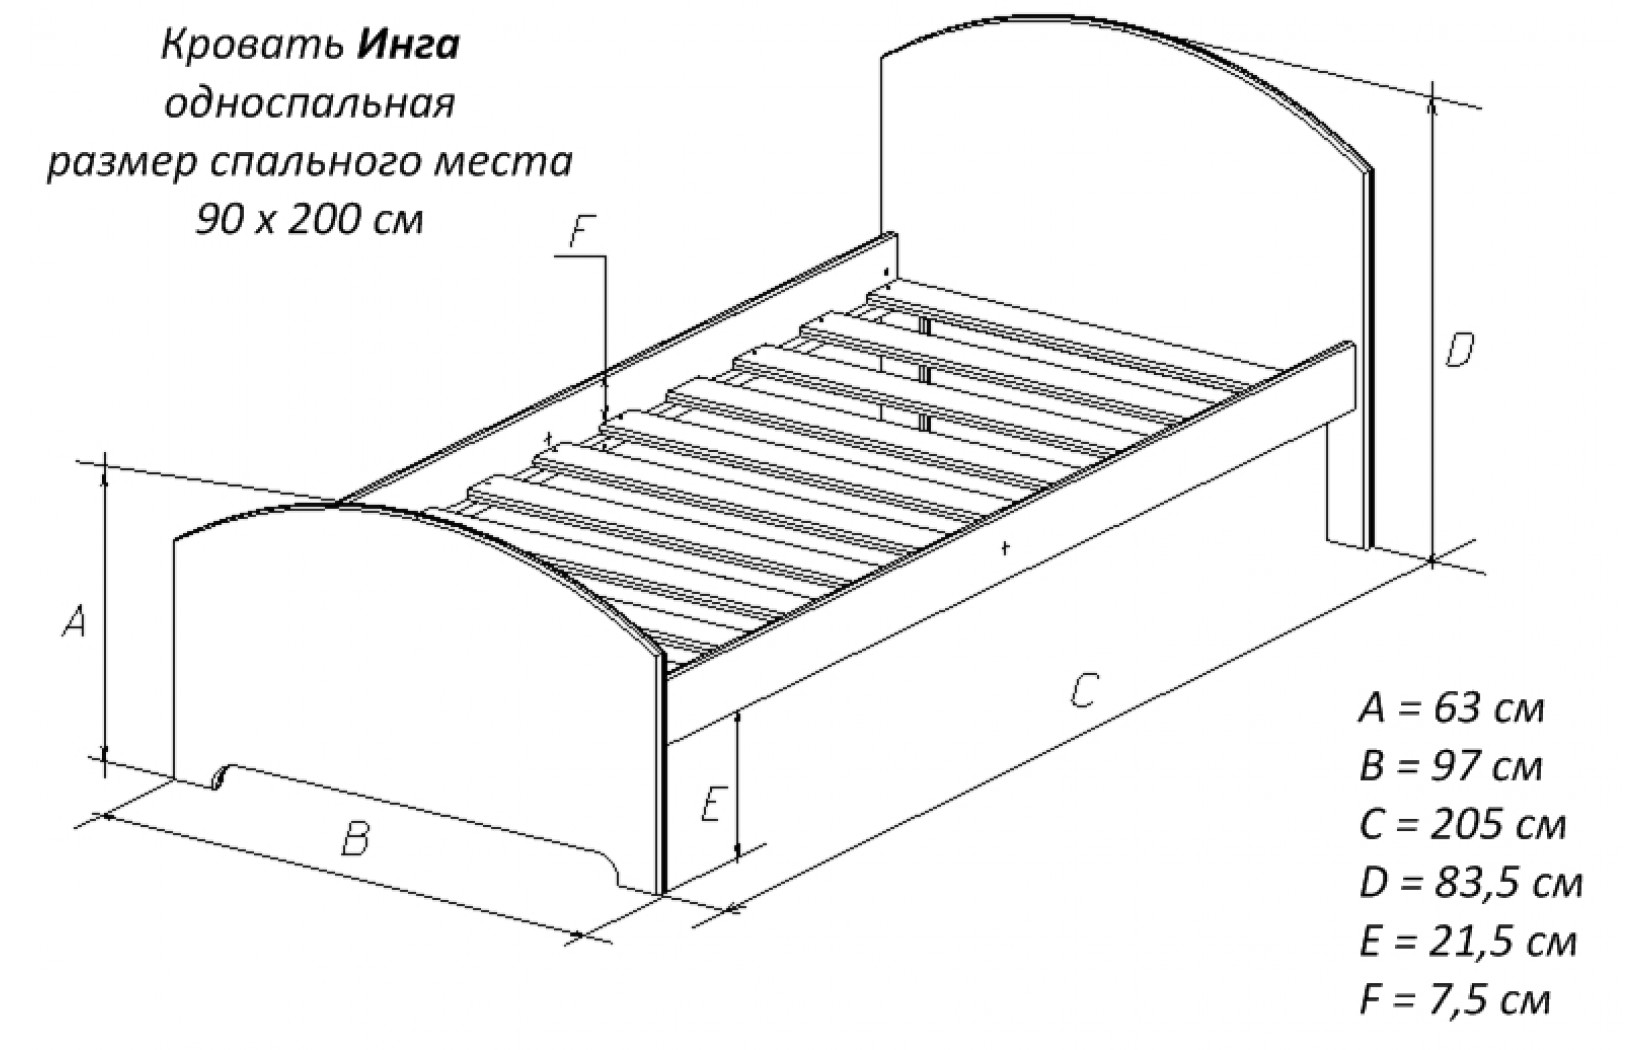 чертеж двуспальной кровати из лдсп